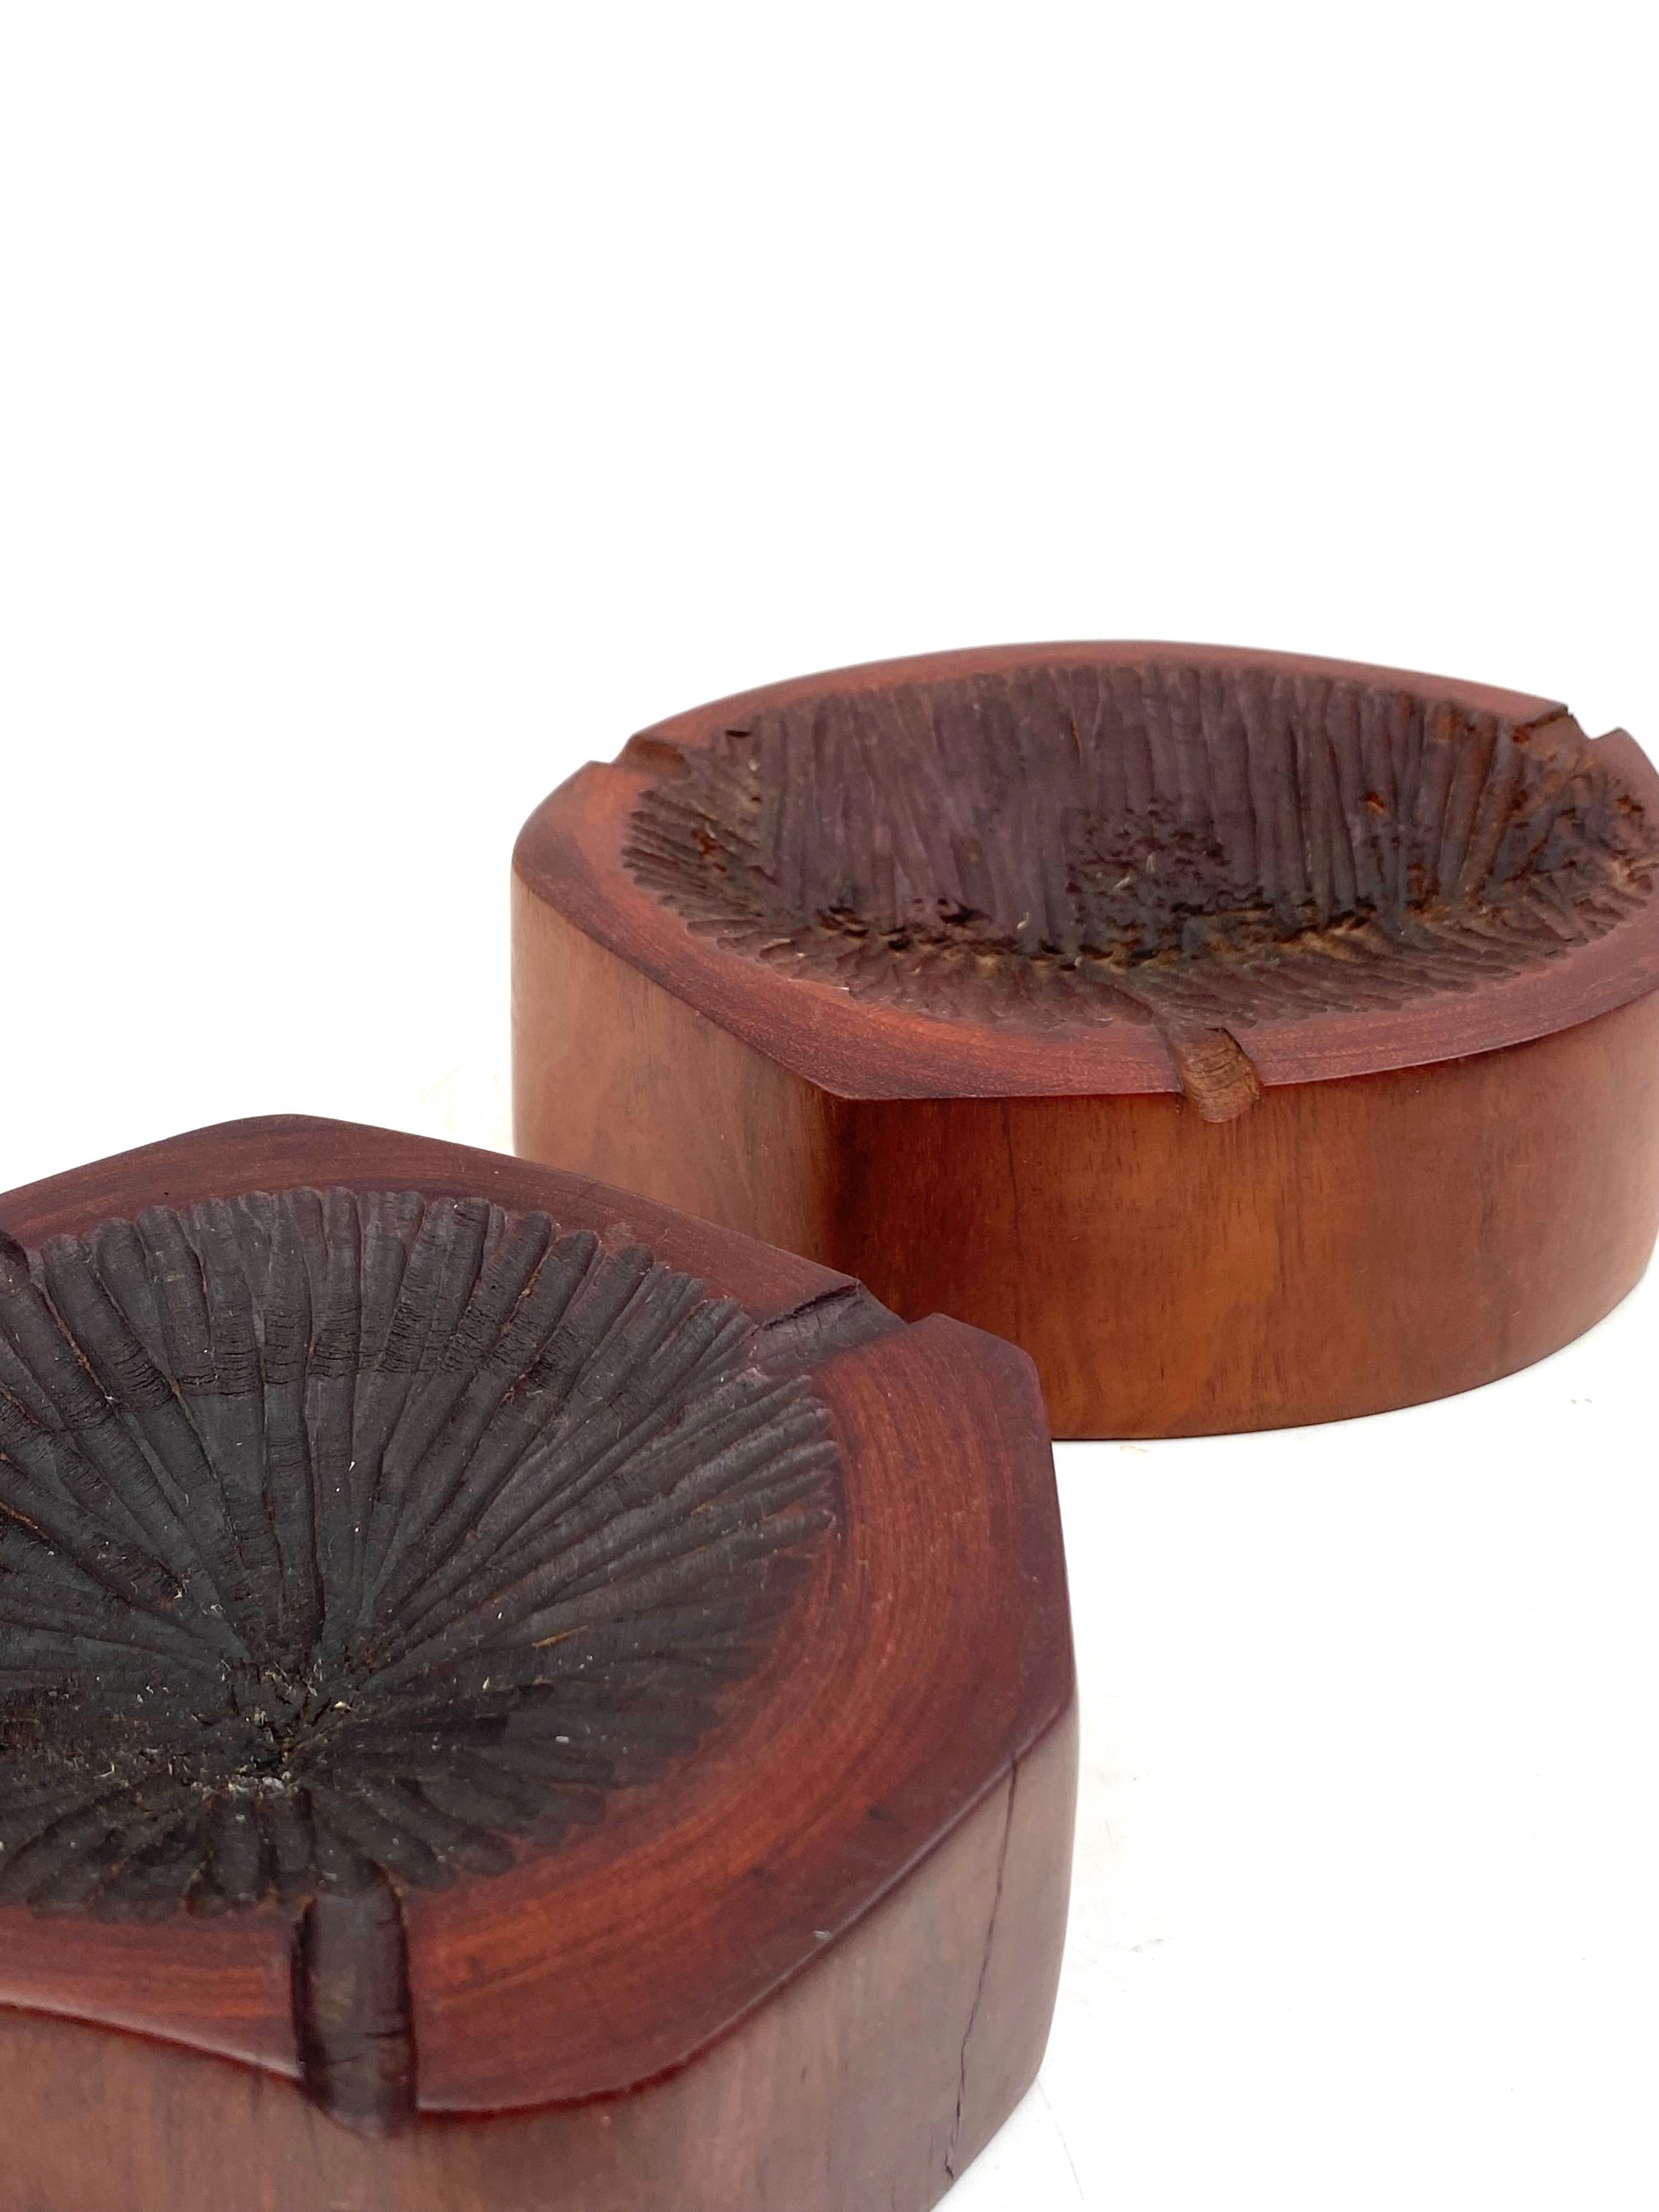 Organic modern set of 2 wood ashtrays, France 1970s For Sale 8